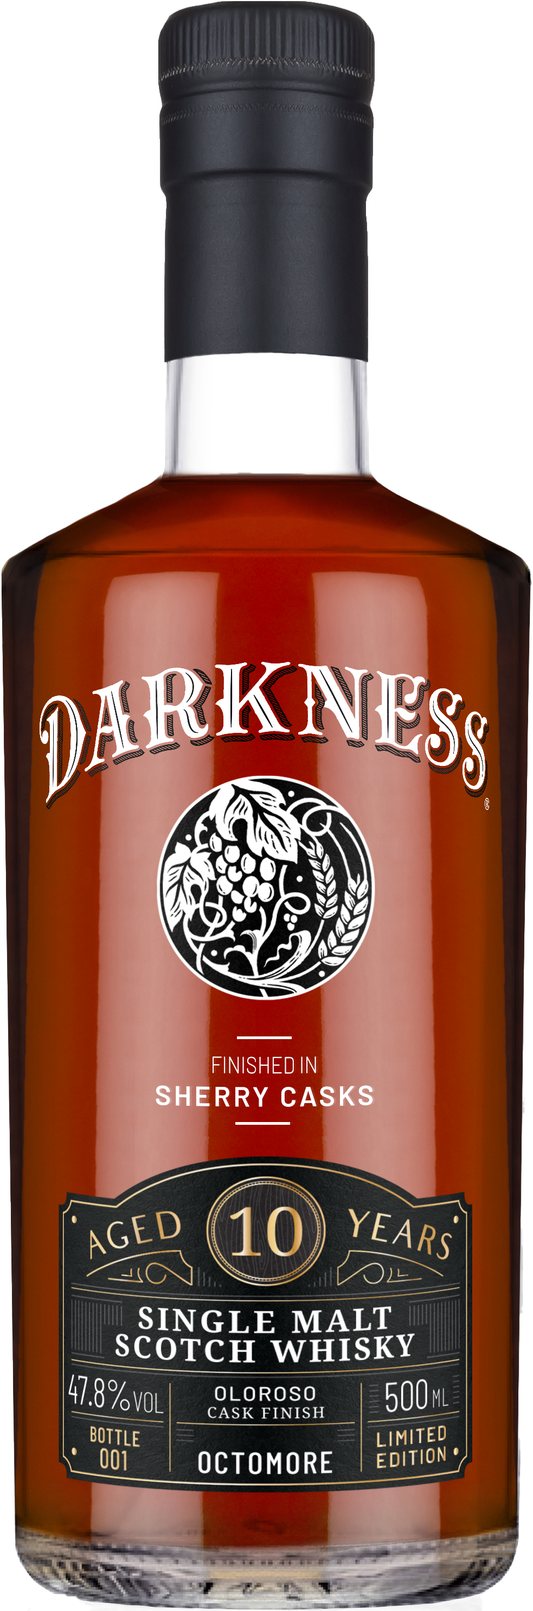 The Darkness Octomore 10 Year Oloroso Single Malt Scotch Whisky 500ml